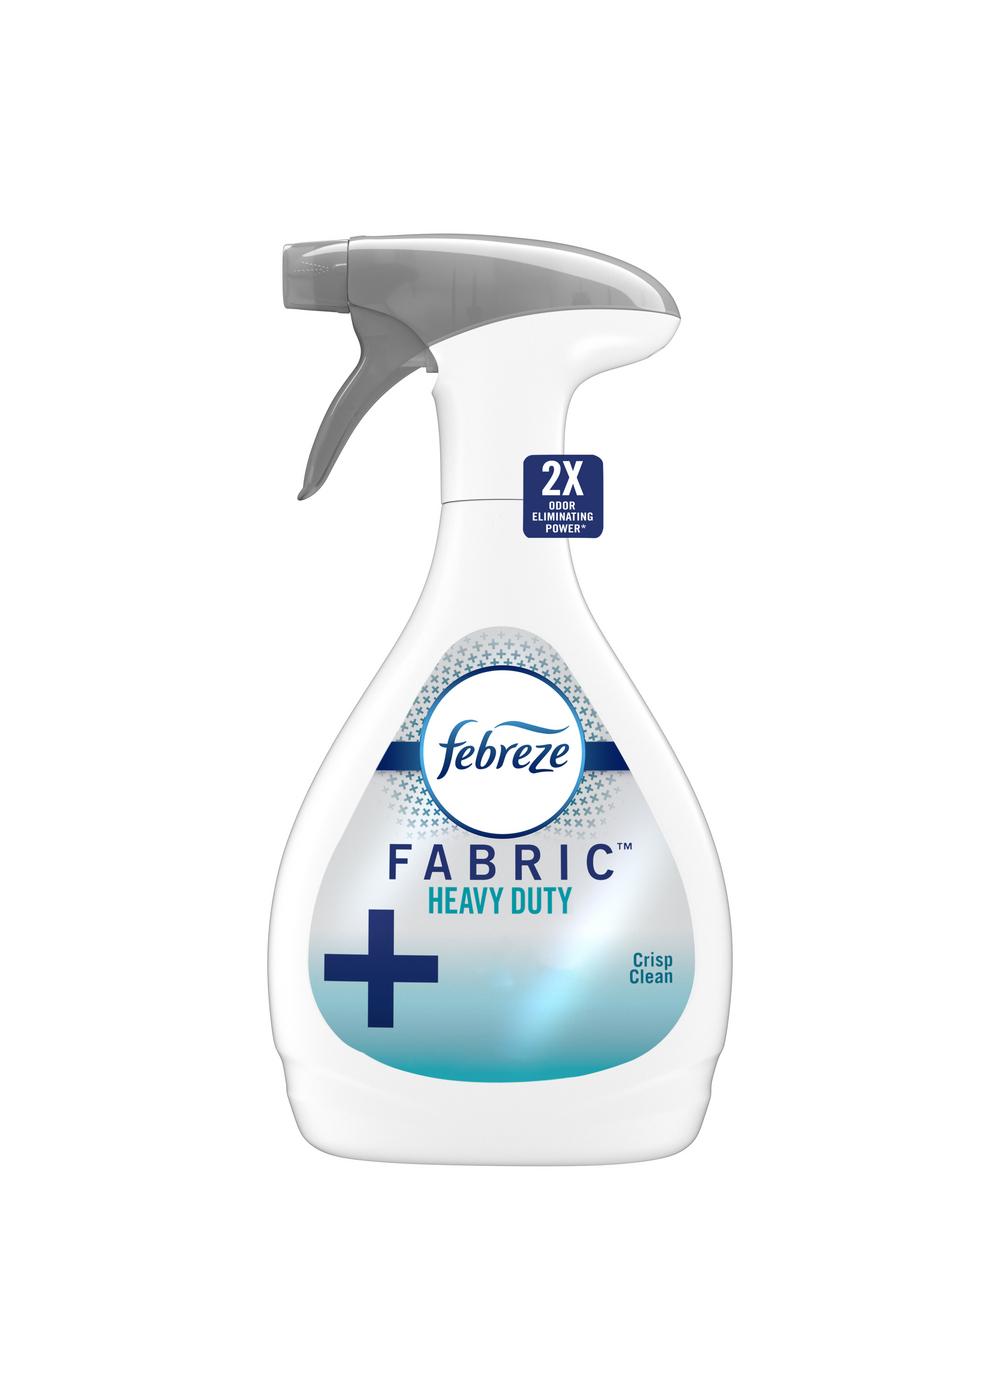 Febreze Heavy Duty Fabric Refresher Spray - Crisp Clean; image 3 of 7